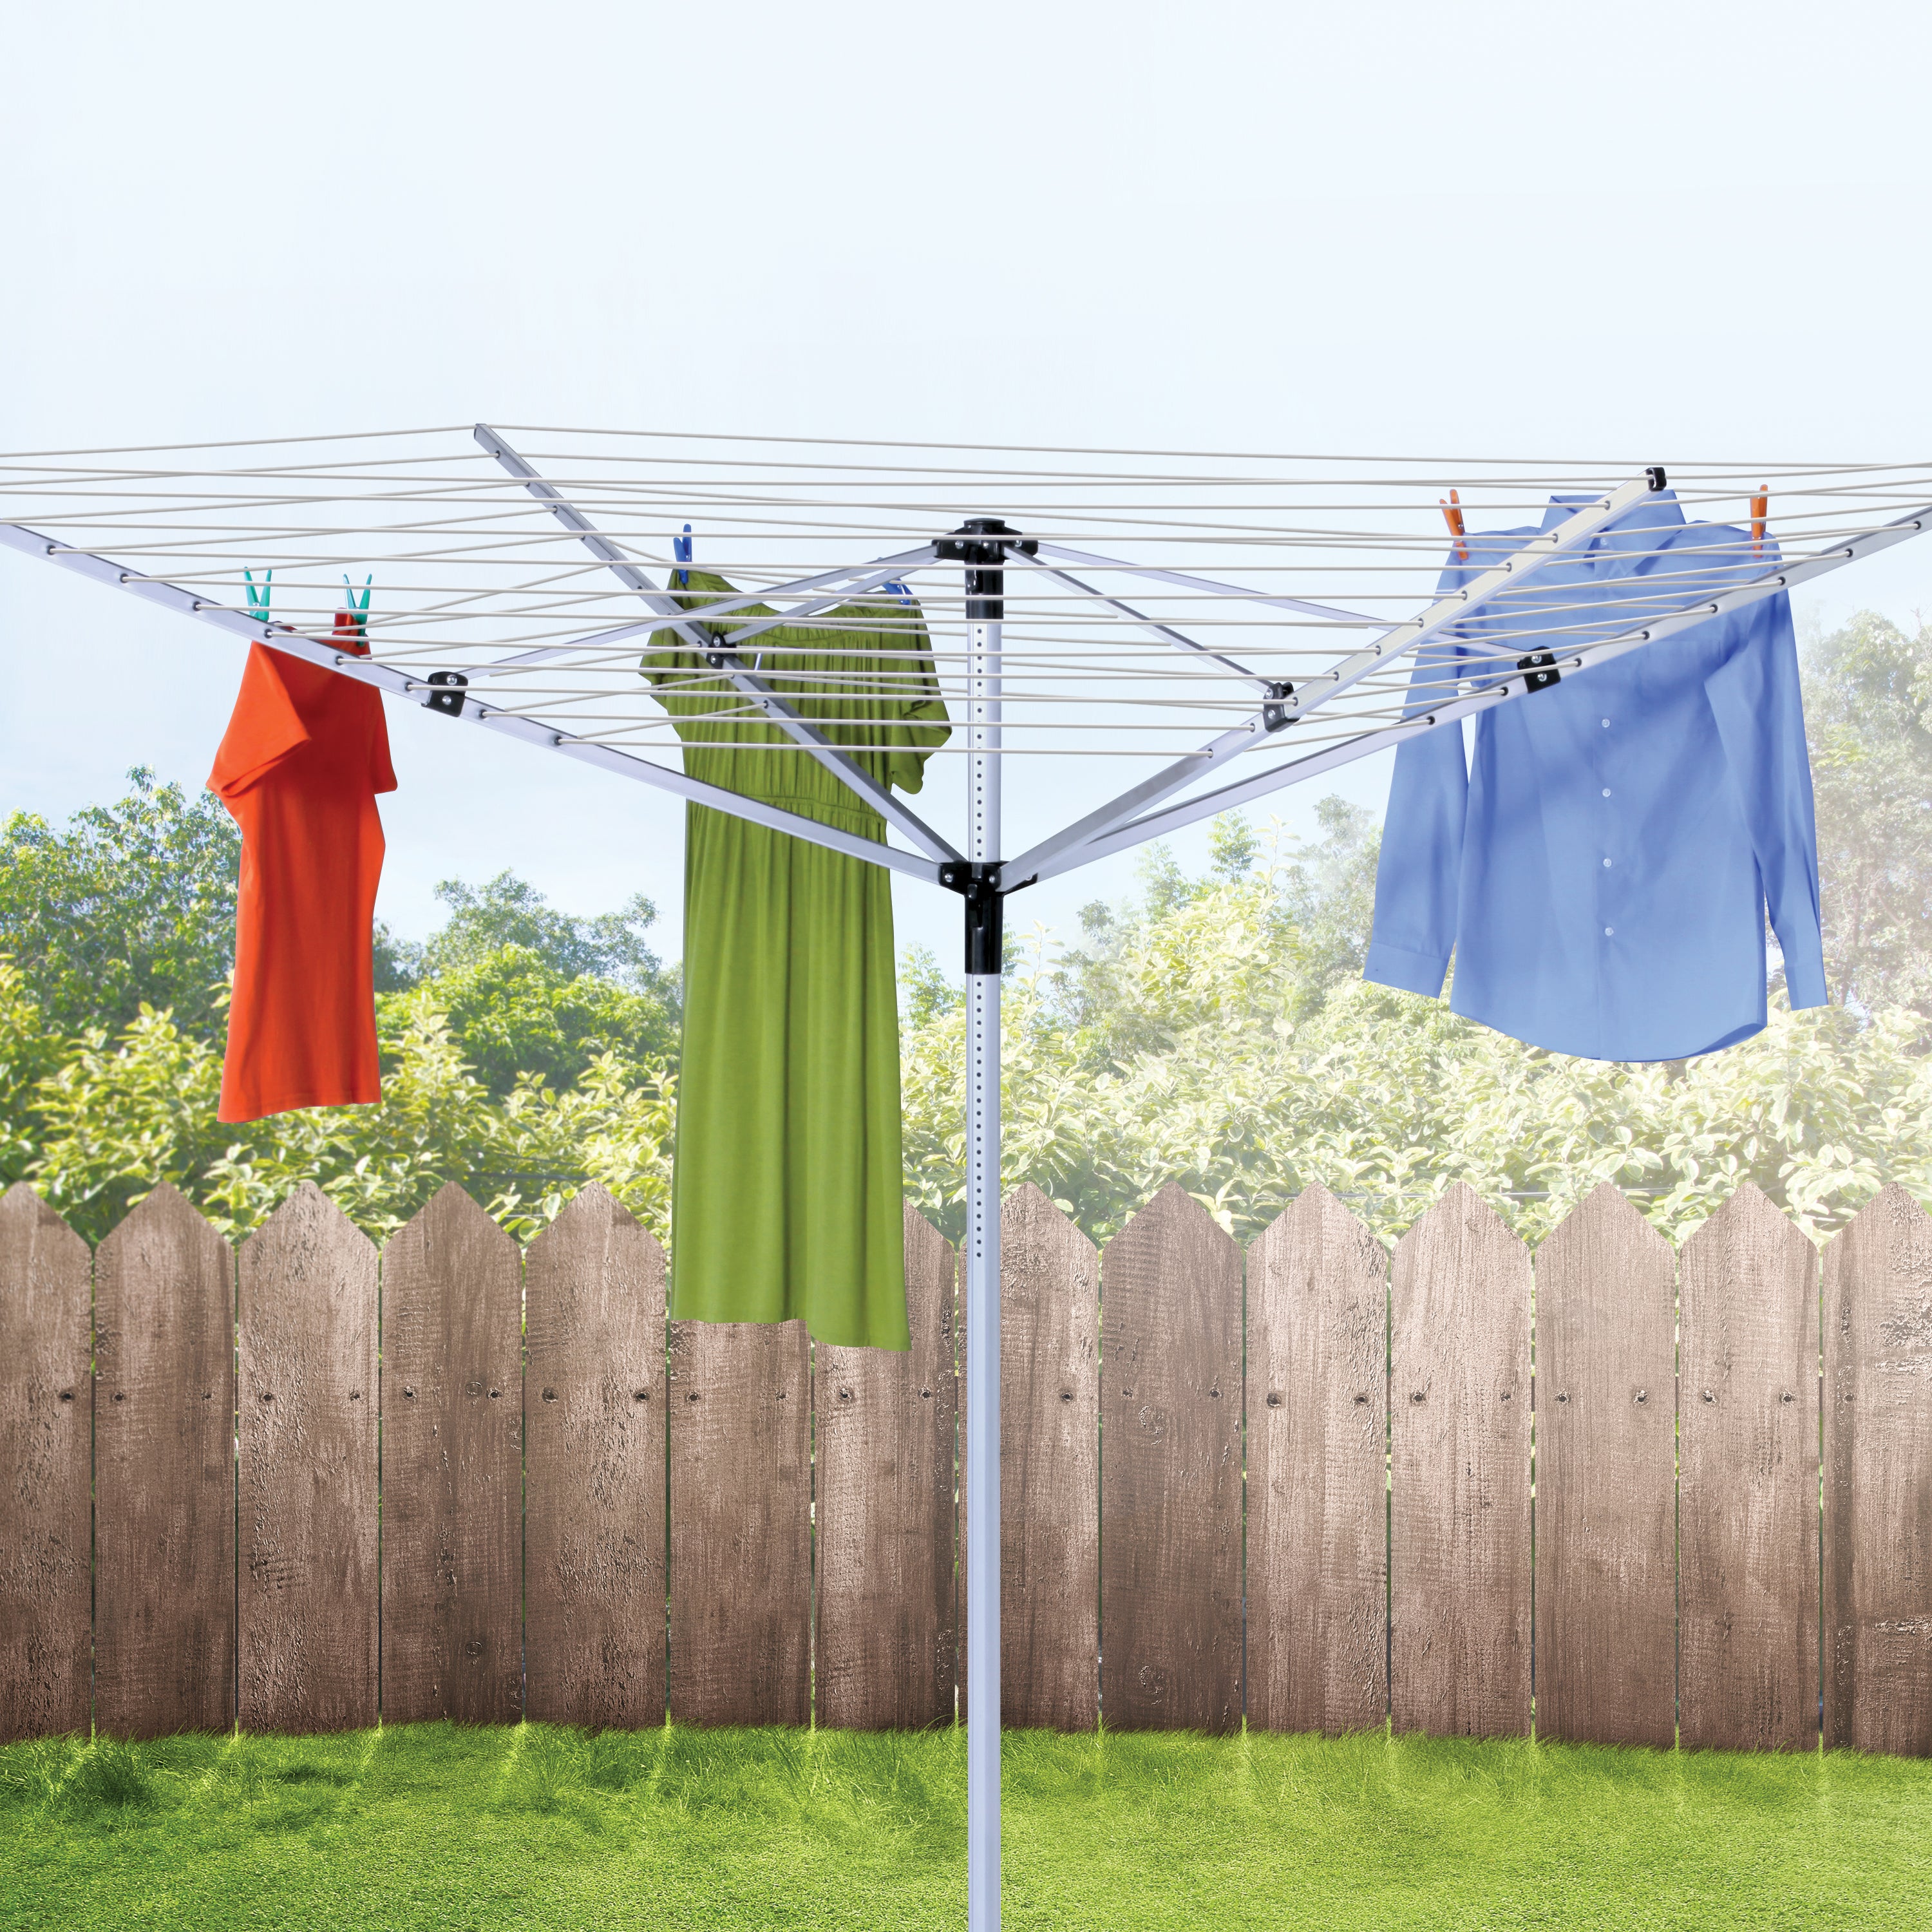 Umbrella clothesline Clotheslines & Drying Racks at